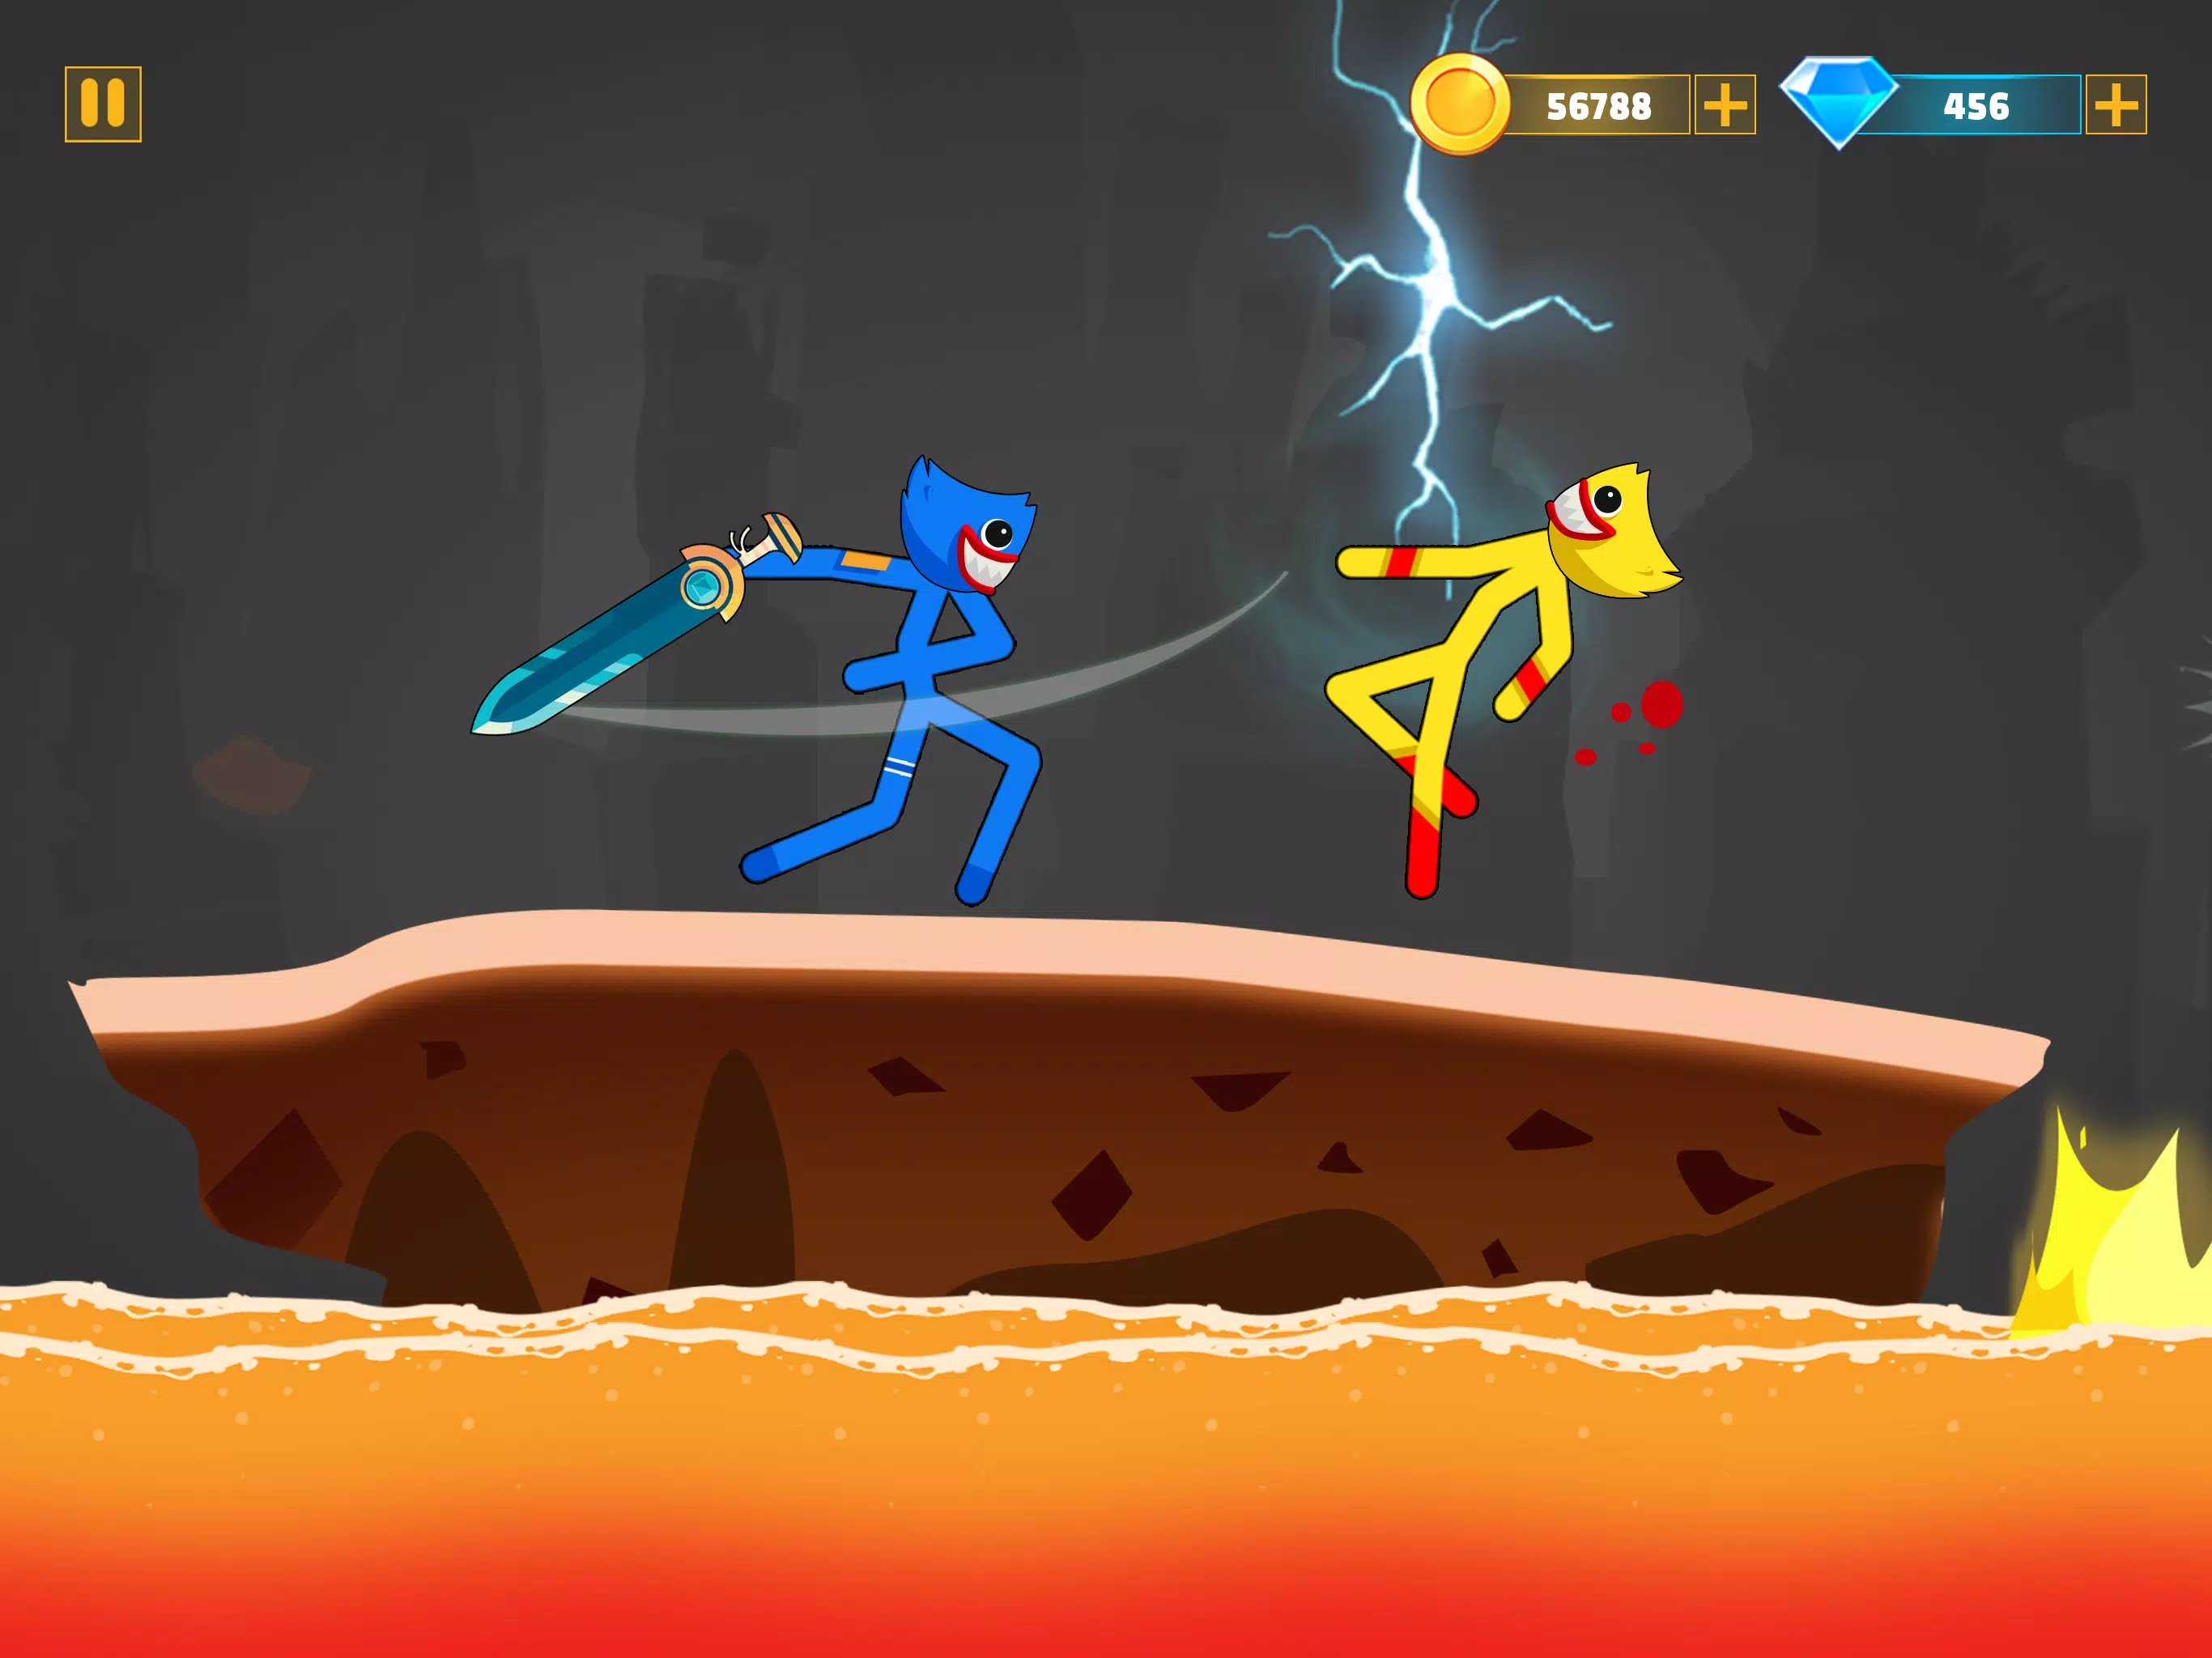 Supreme Brawl Stickman Fight Apk Download for Android- Latest version 2.5-  com.onegame.supremebrawl.stickmanfight